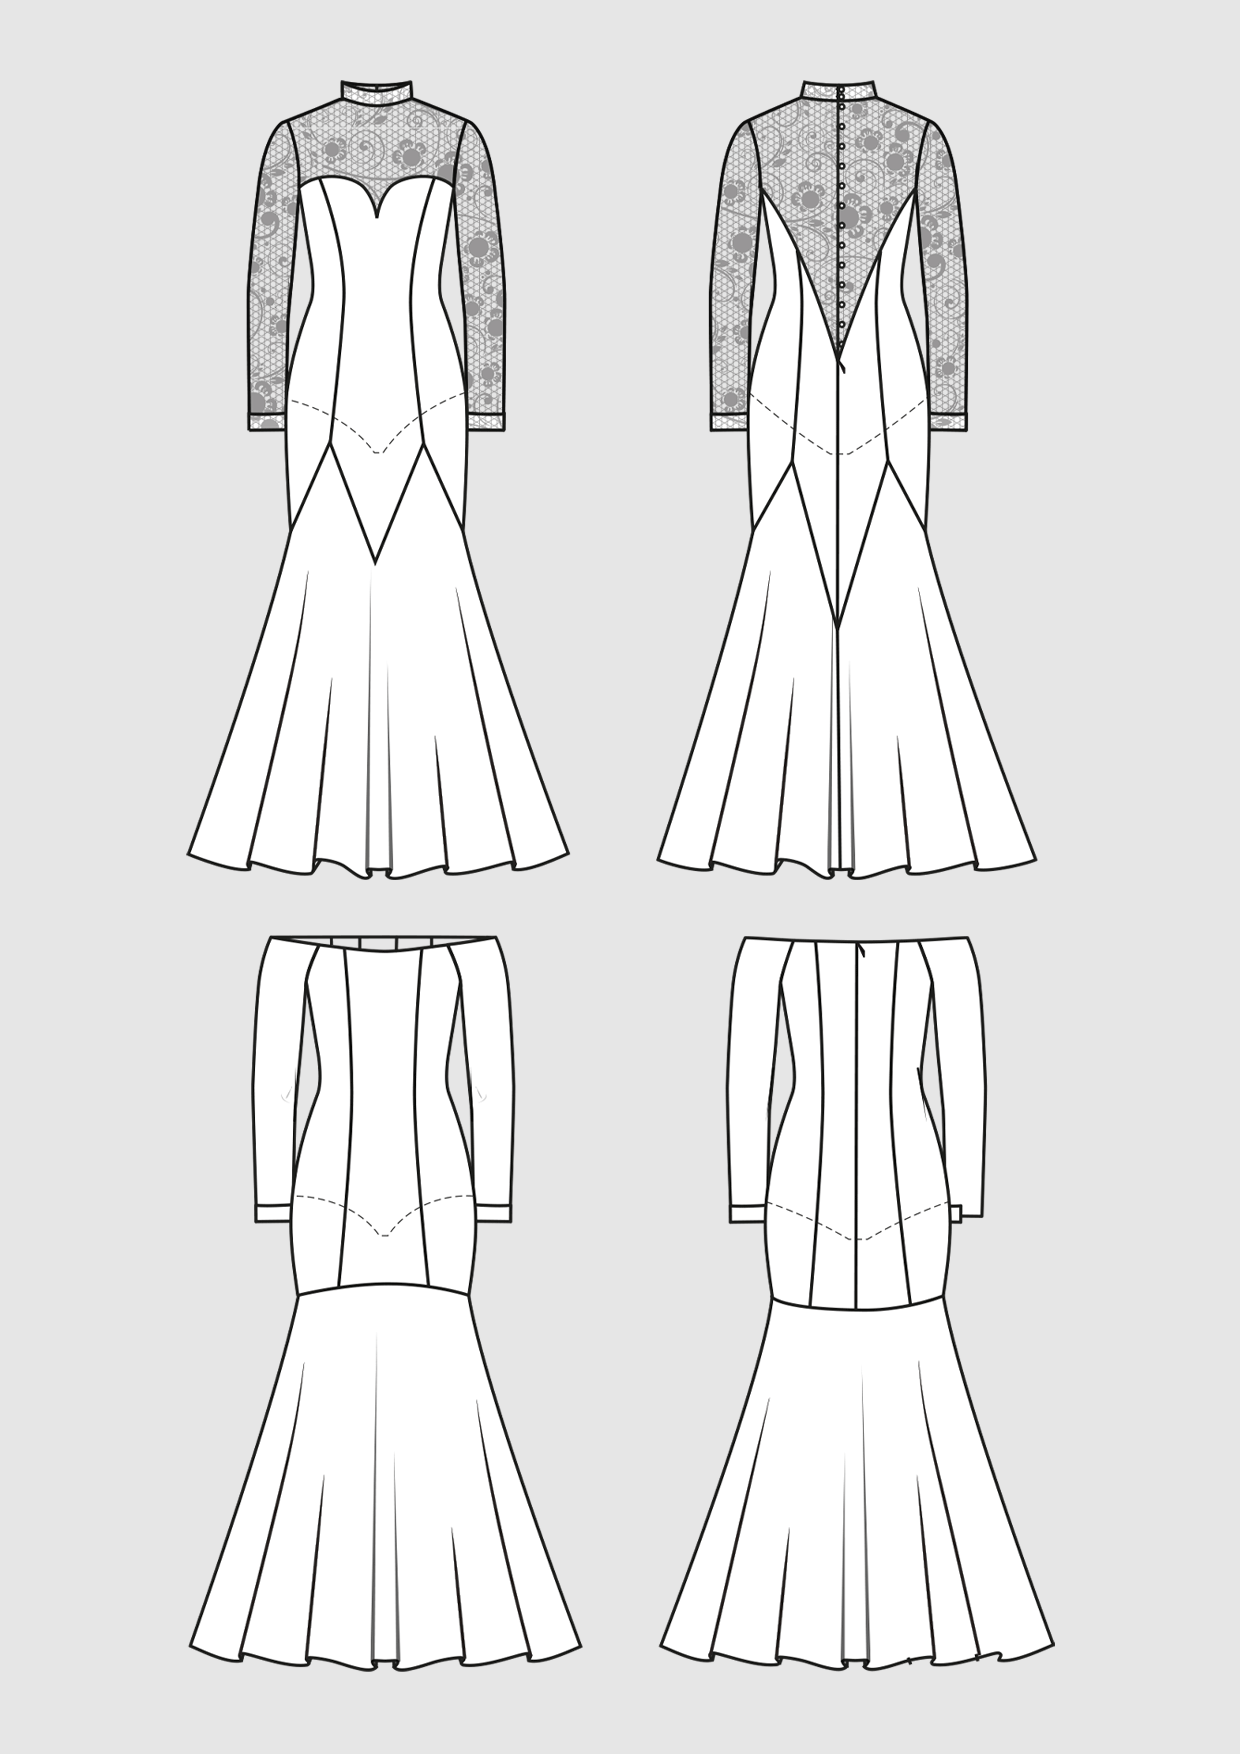 Product: Pattern Dance Dresses for Ballroom Dance